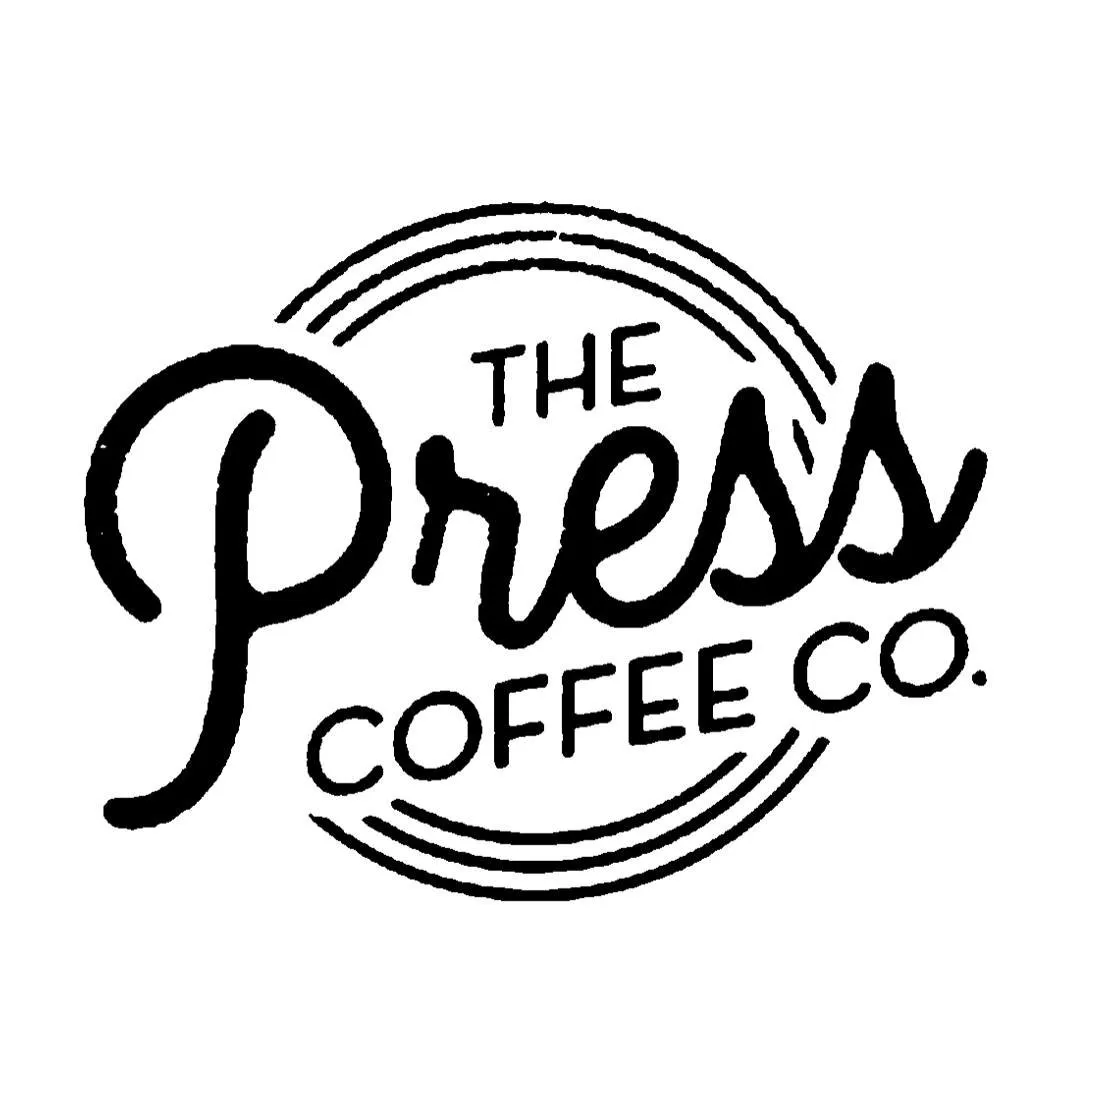 the press coffee company